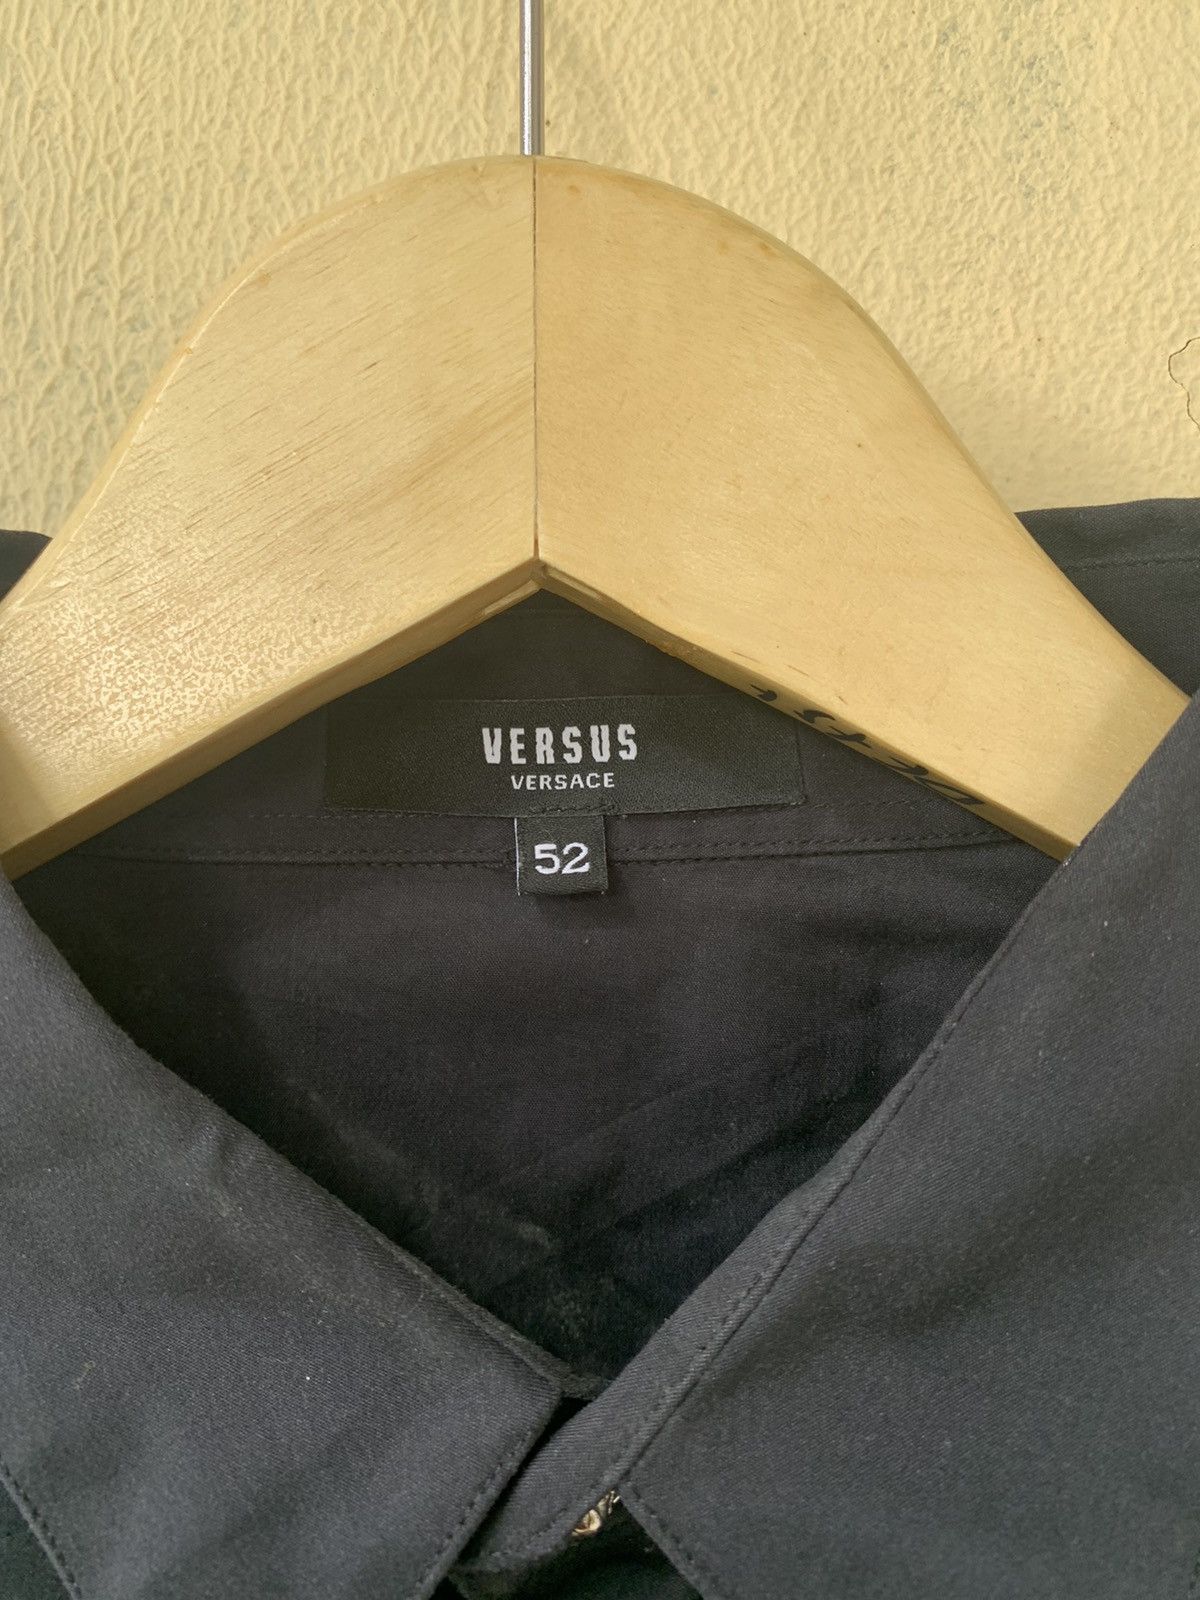 Versace Versus Versace Black Shirt Size US L / EU 52-54 / 3 - 3 Thumbnail